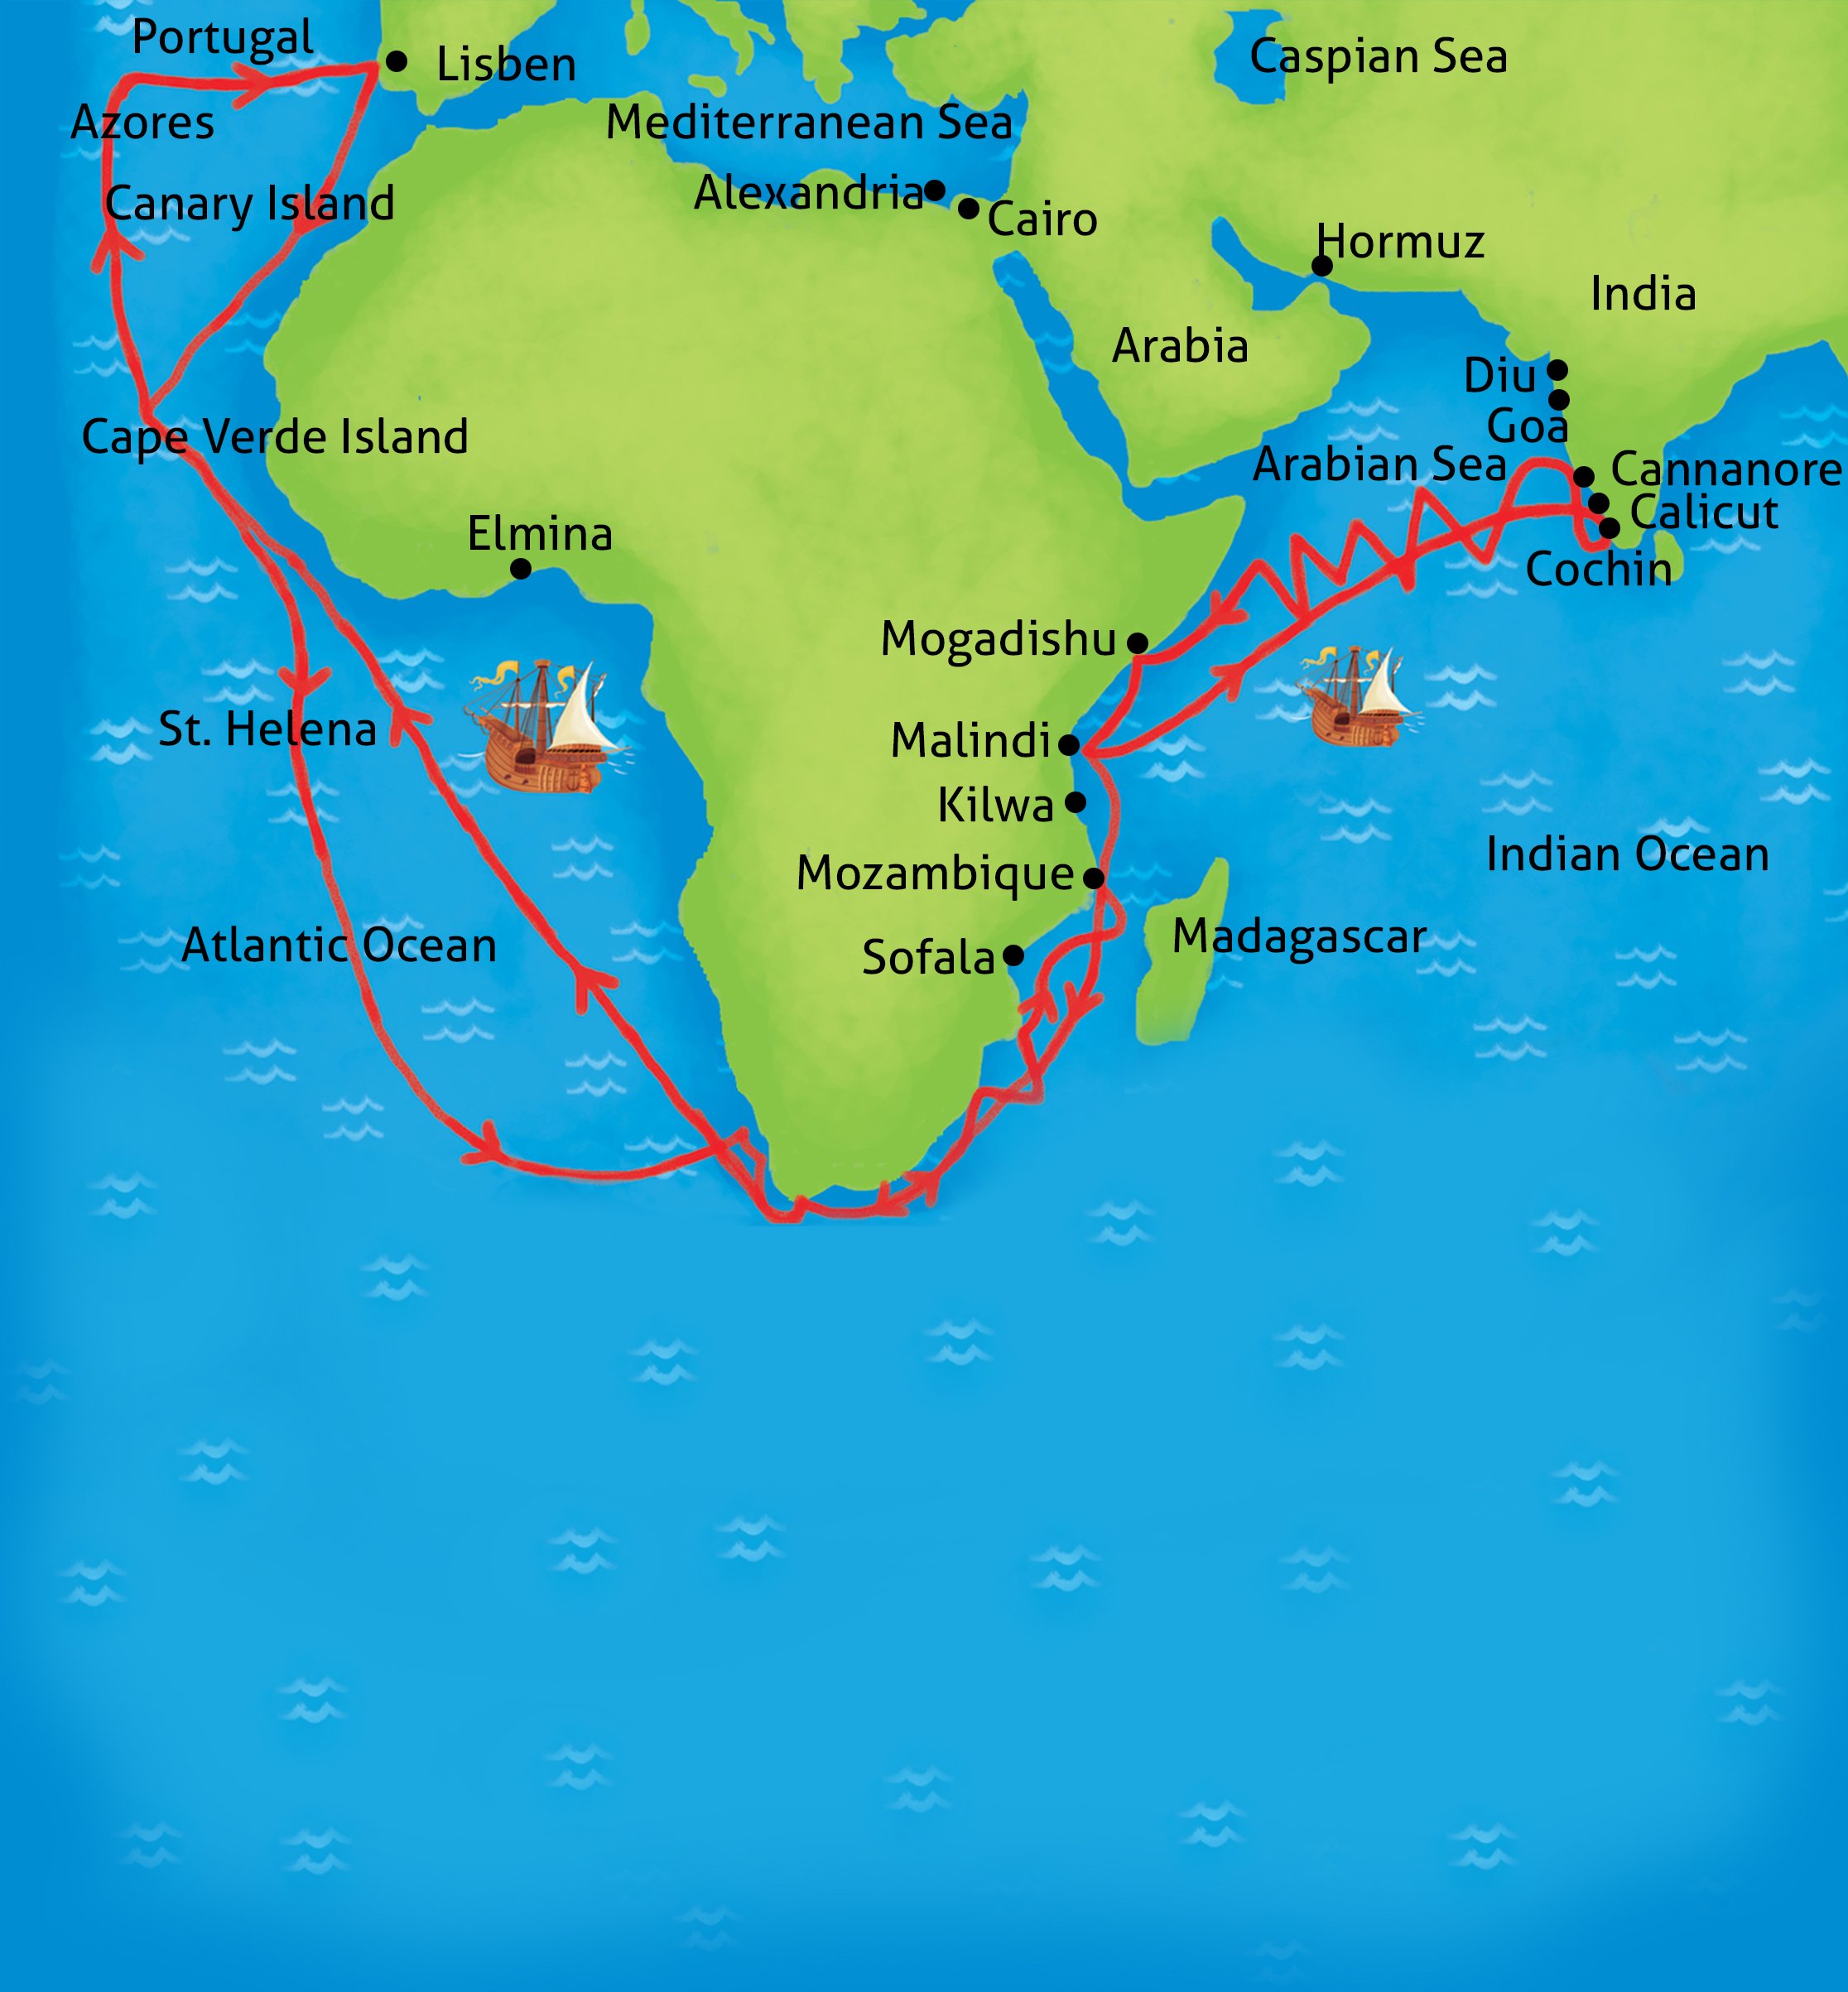 what sea route did vasco da gama take to get to india